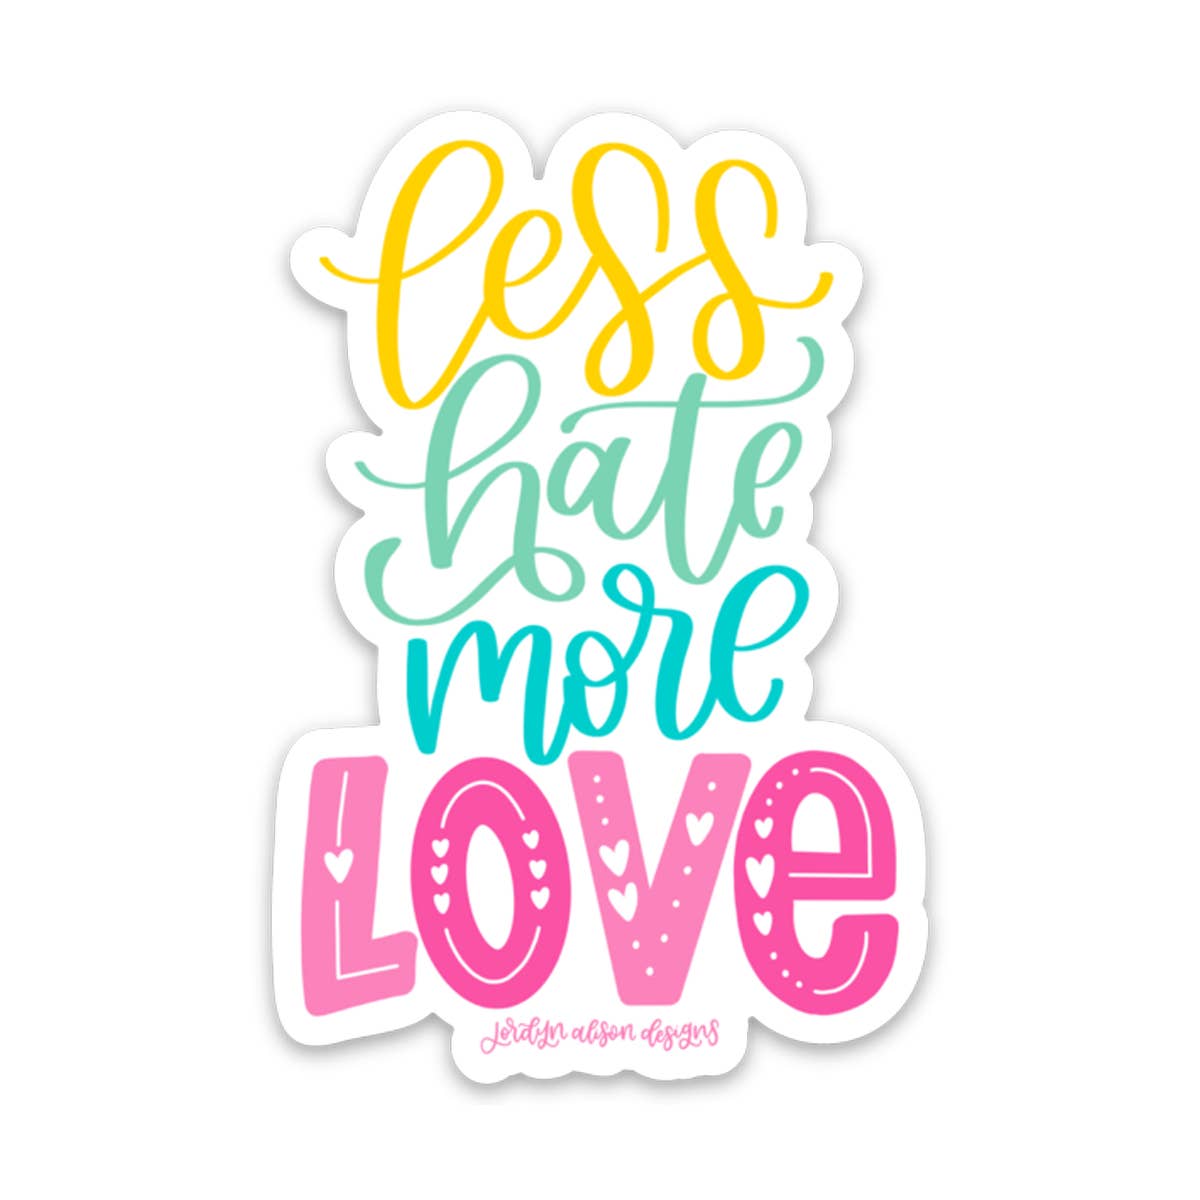 Less Hate More Love, Vinyl Sticker